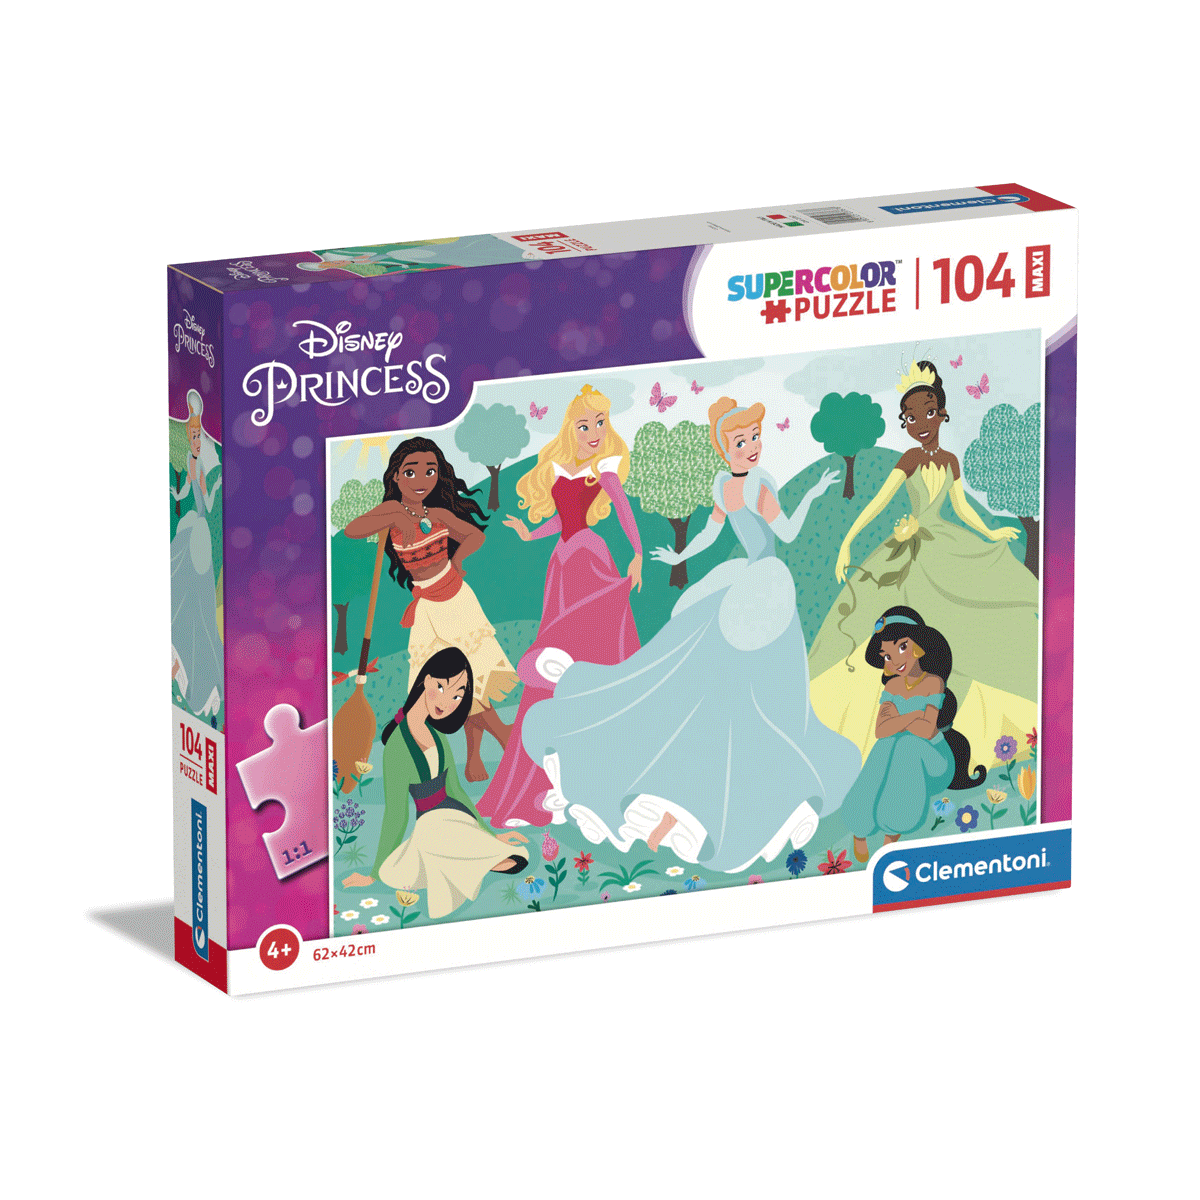 Clementoni - supercolor puzzle disney princess - 104 maxi pezzi - DISNEY PRINCESS